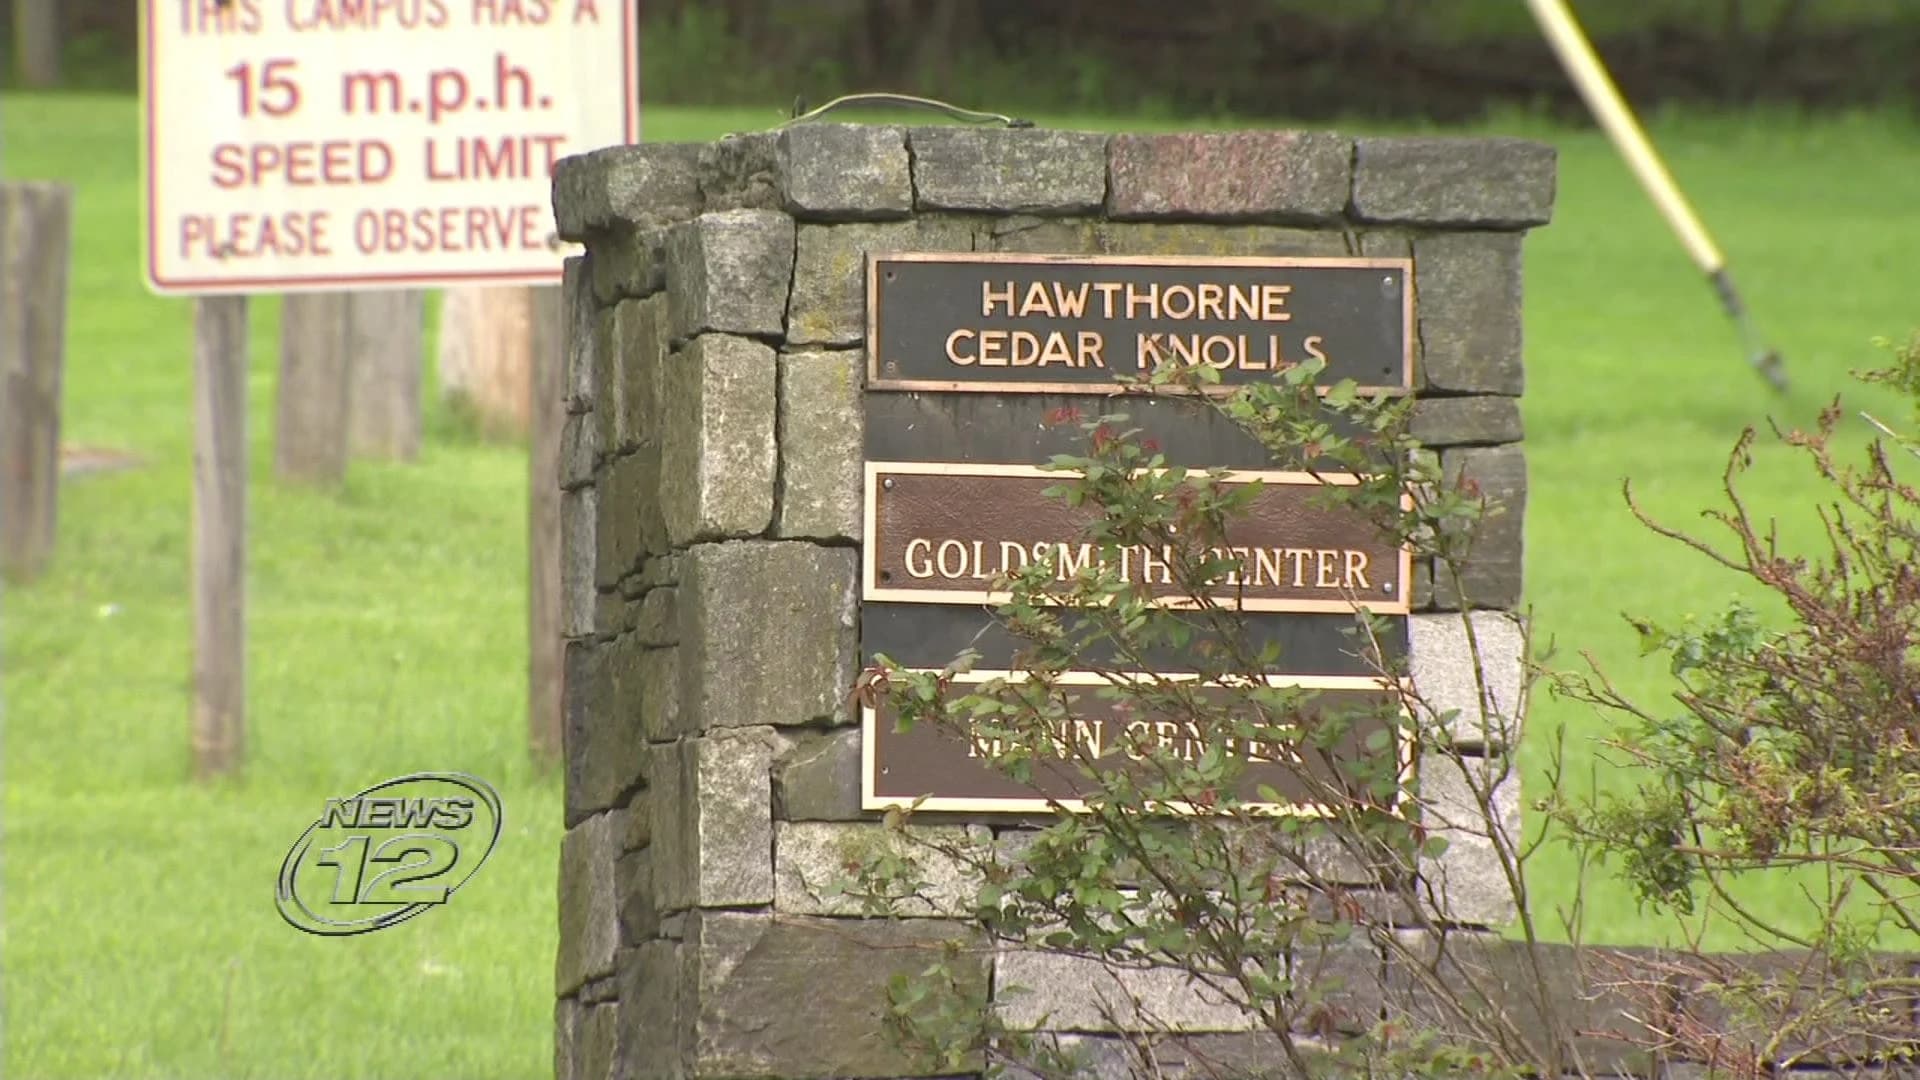 Hawthorne Cedar Knolls School halts student intake